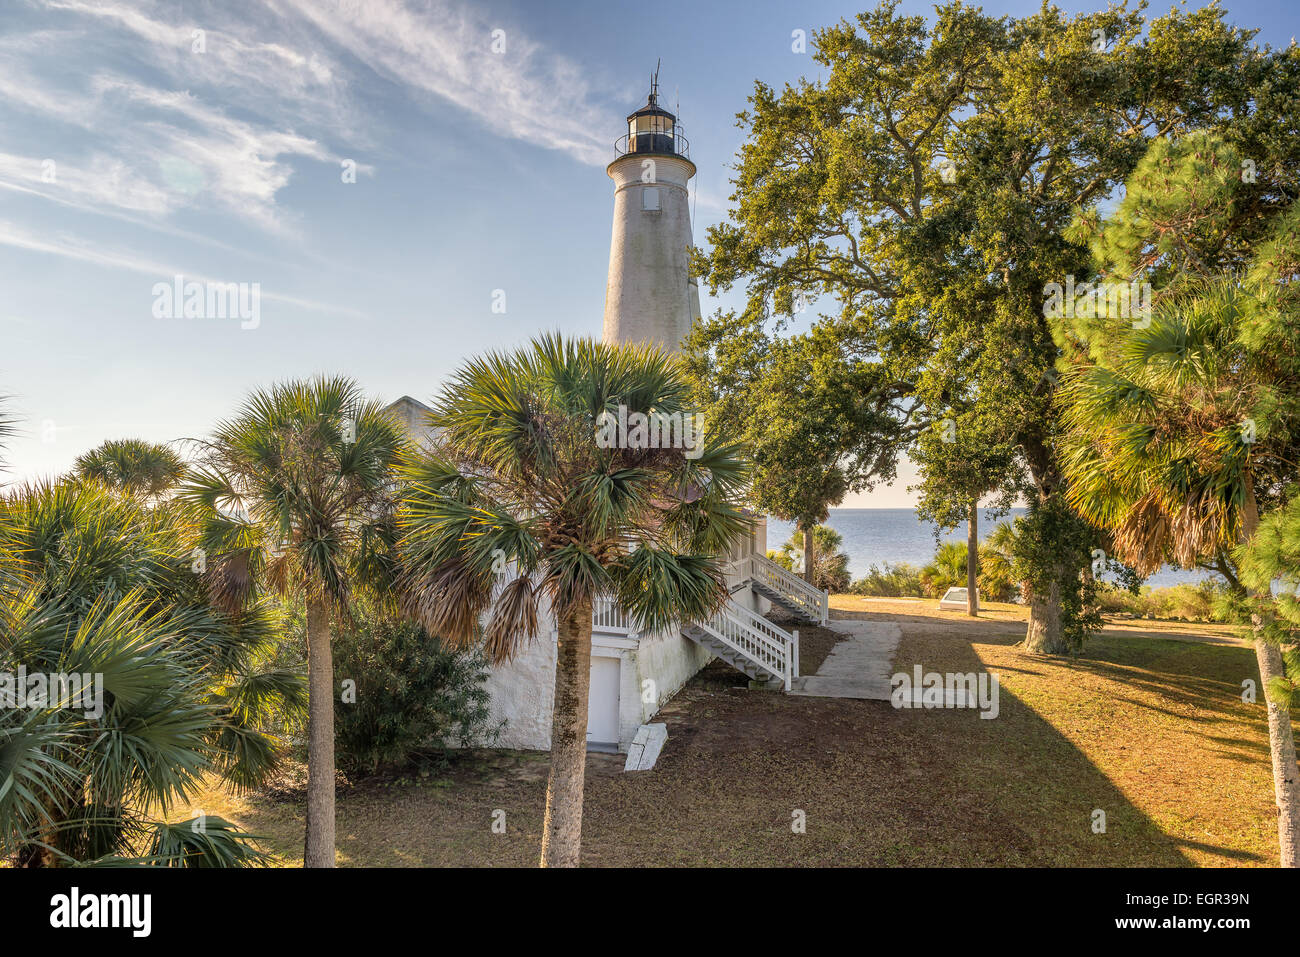 St. Marks National Wildlife Refuge lighthouse, Florida. The St. Marks Light is the second-oldest light station in Florida. Stock Photo